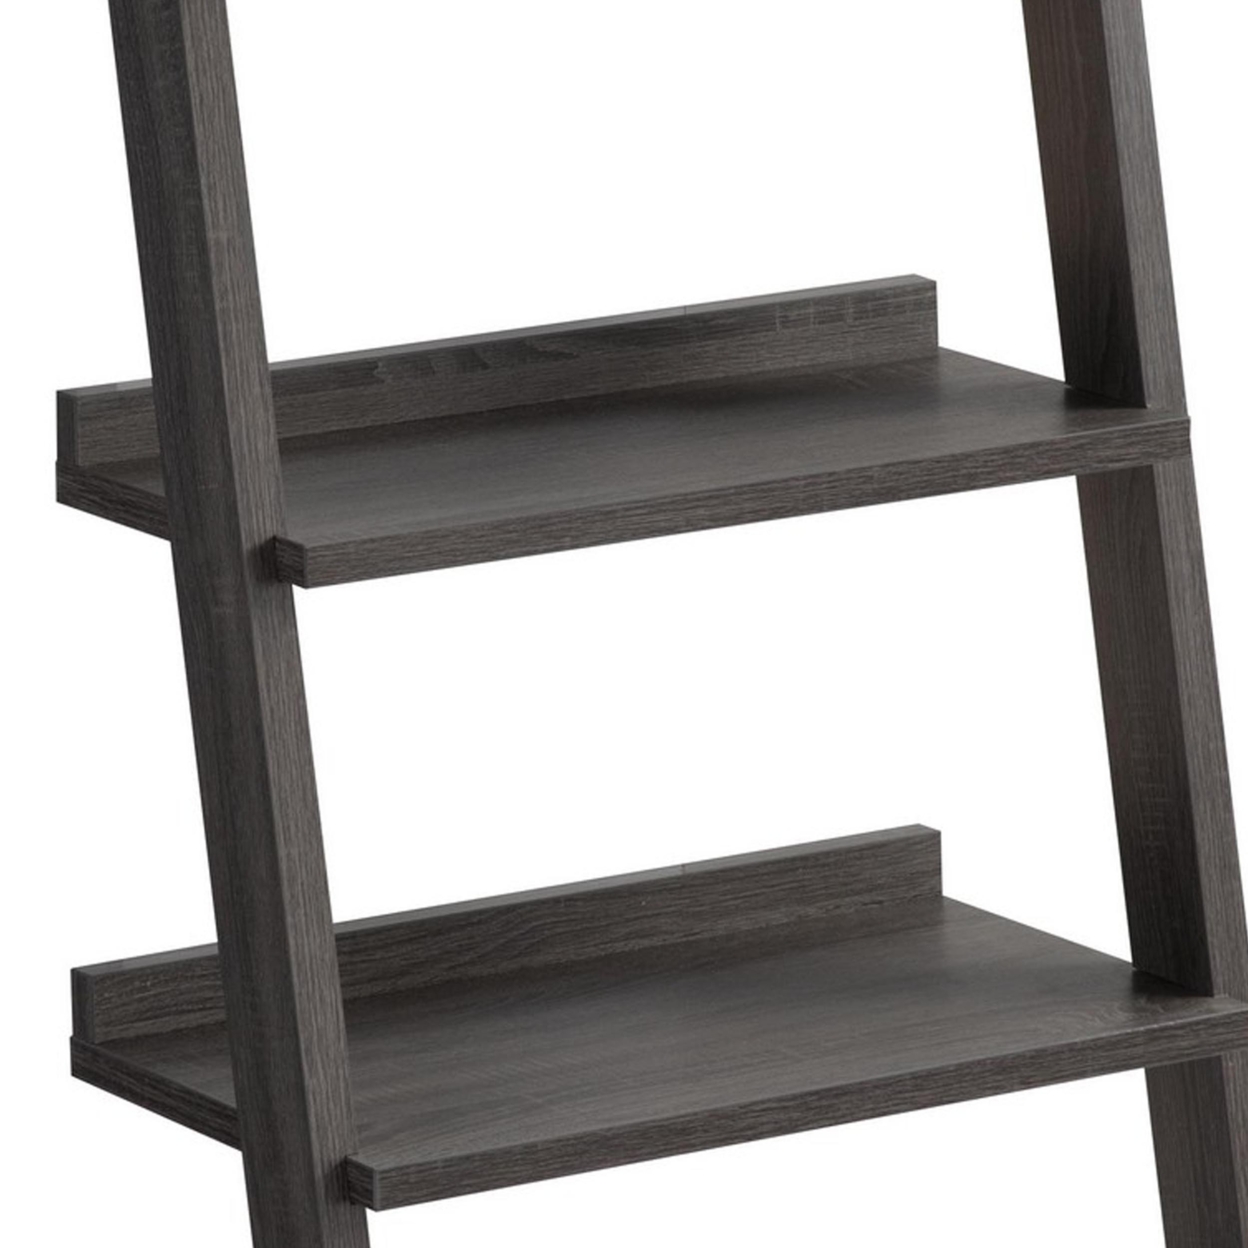 Iker 72 Inch Modern Bookcase With 7 Shelves, Ladder Style, Distressed Gray- Saltoro Sherpi